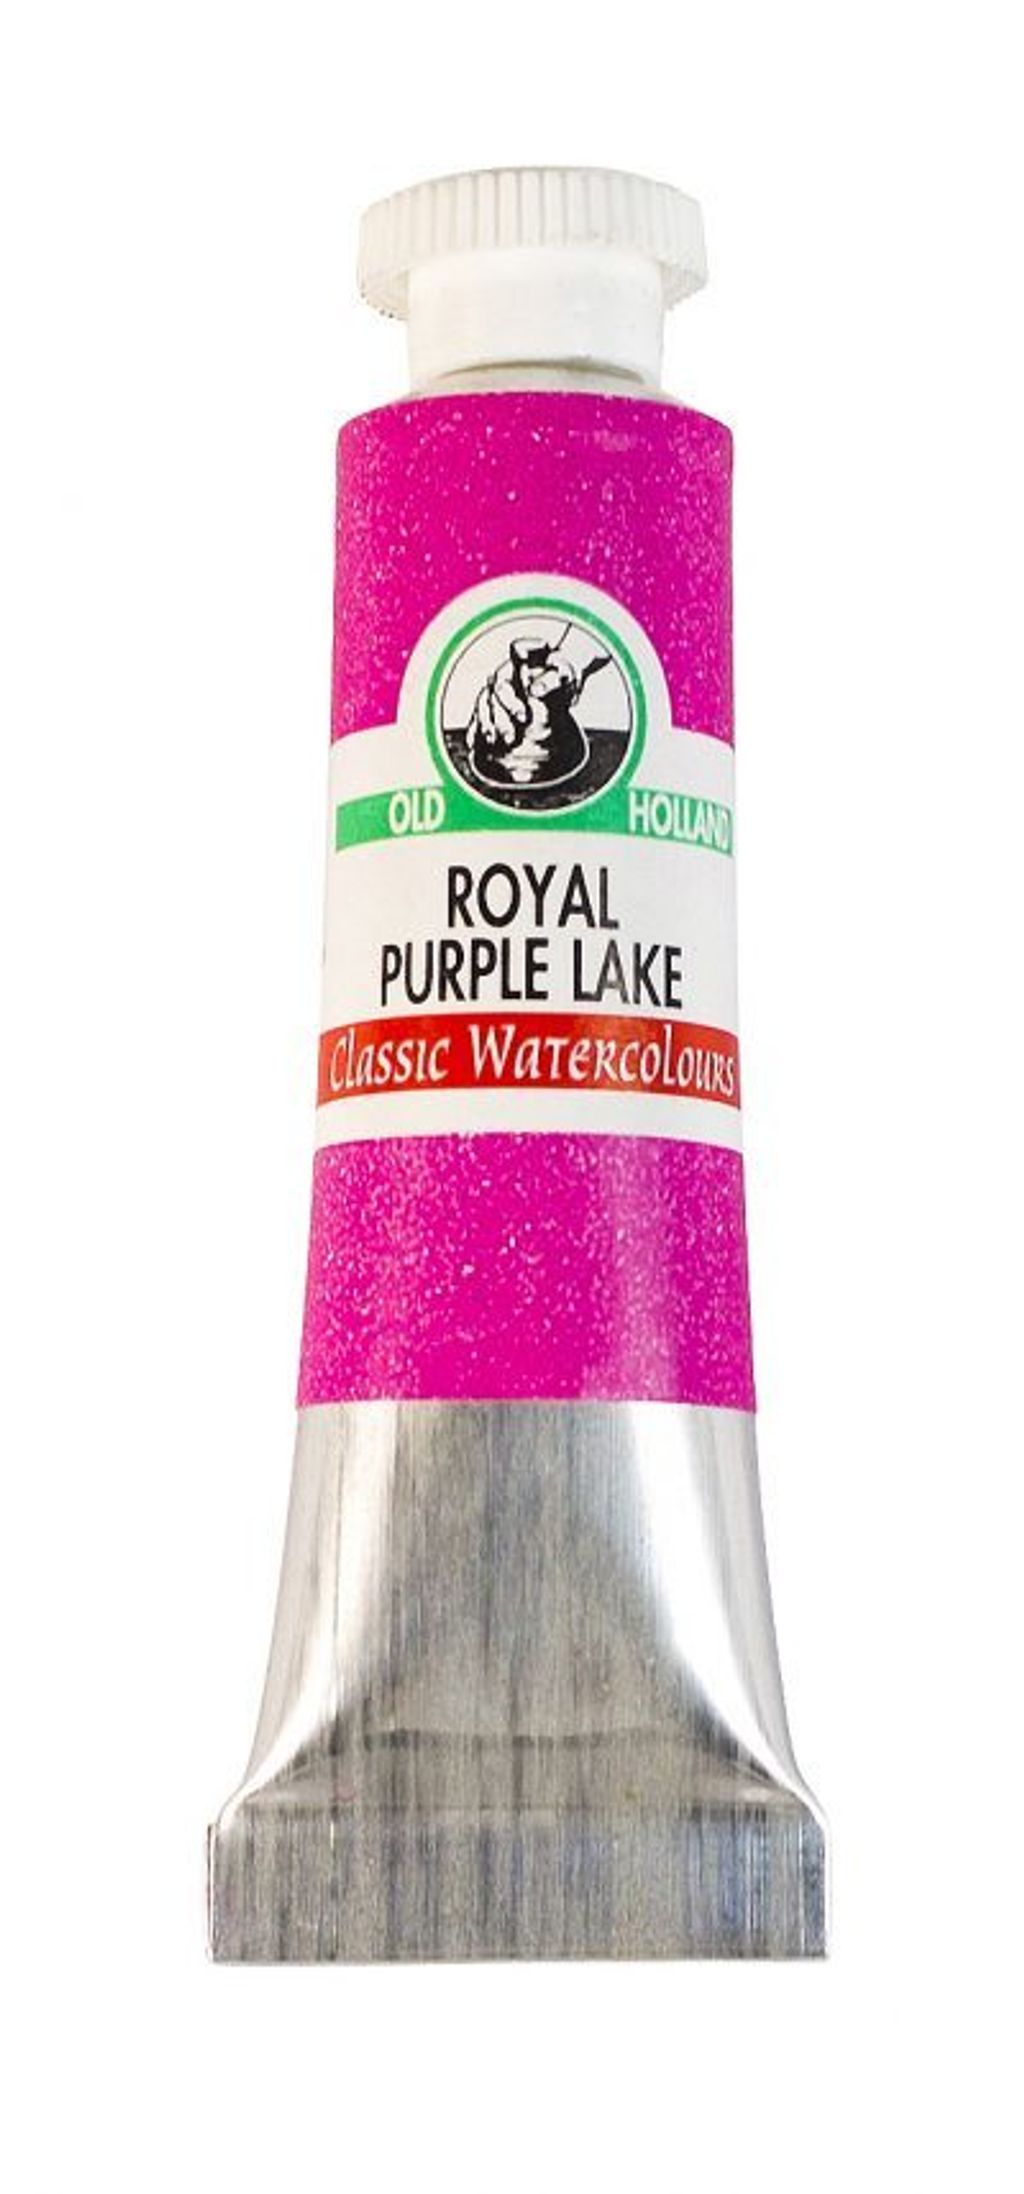 C184_Royal_Purple_Lake-400x857.jpg